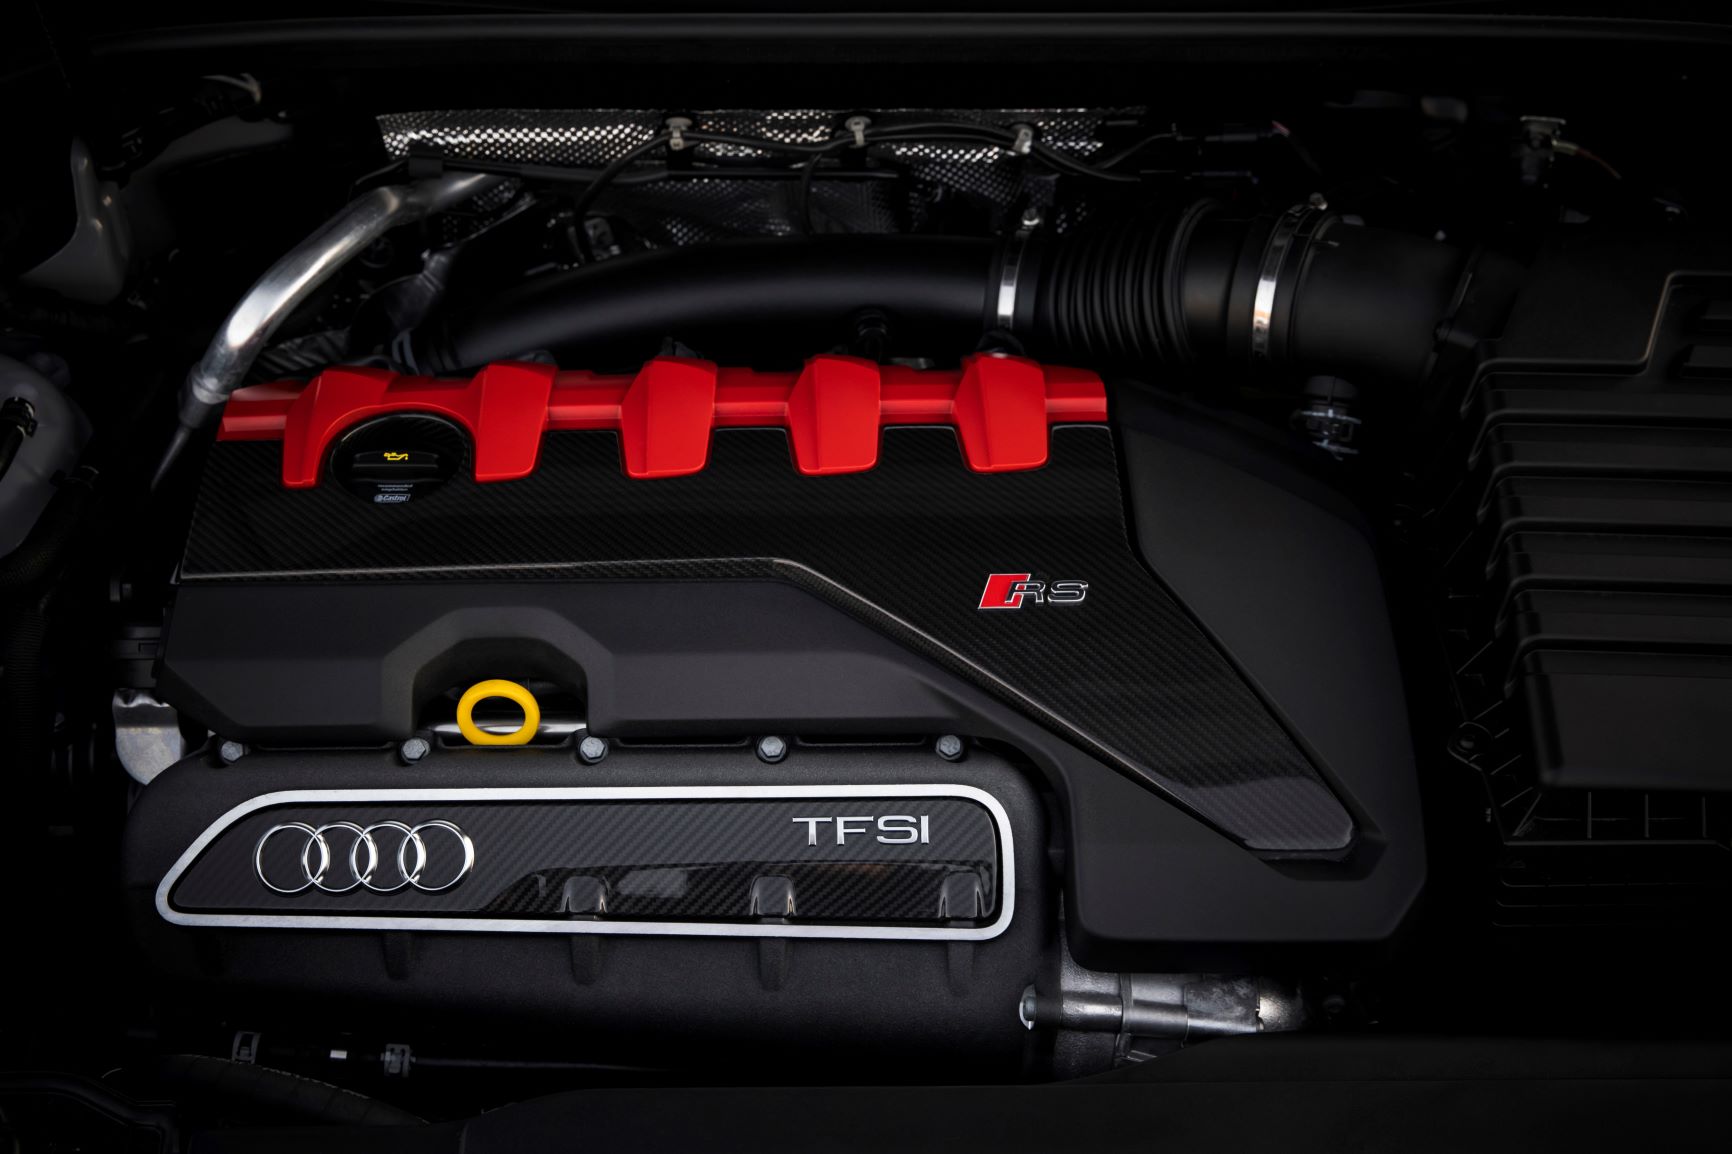 Audi's turbo 2.5 litre five cylinder engine